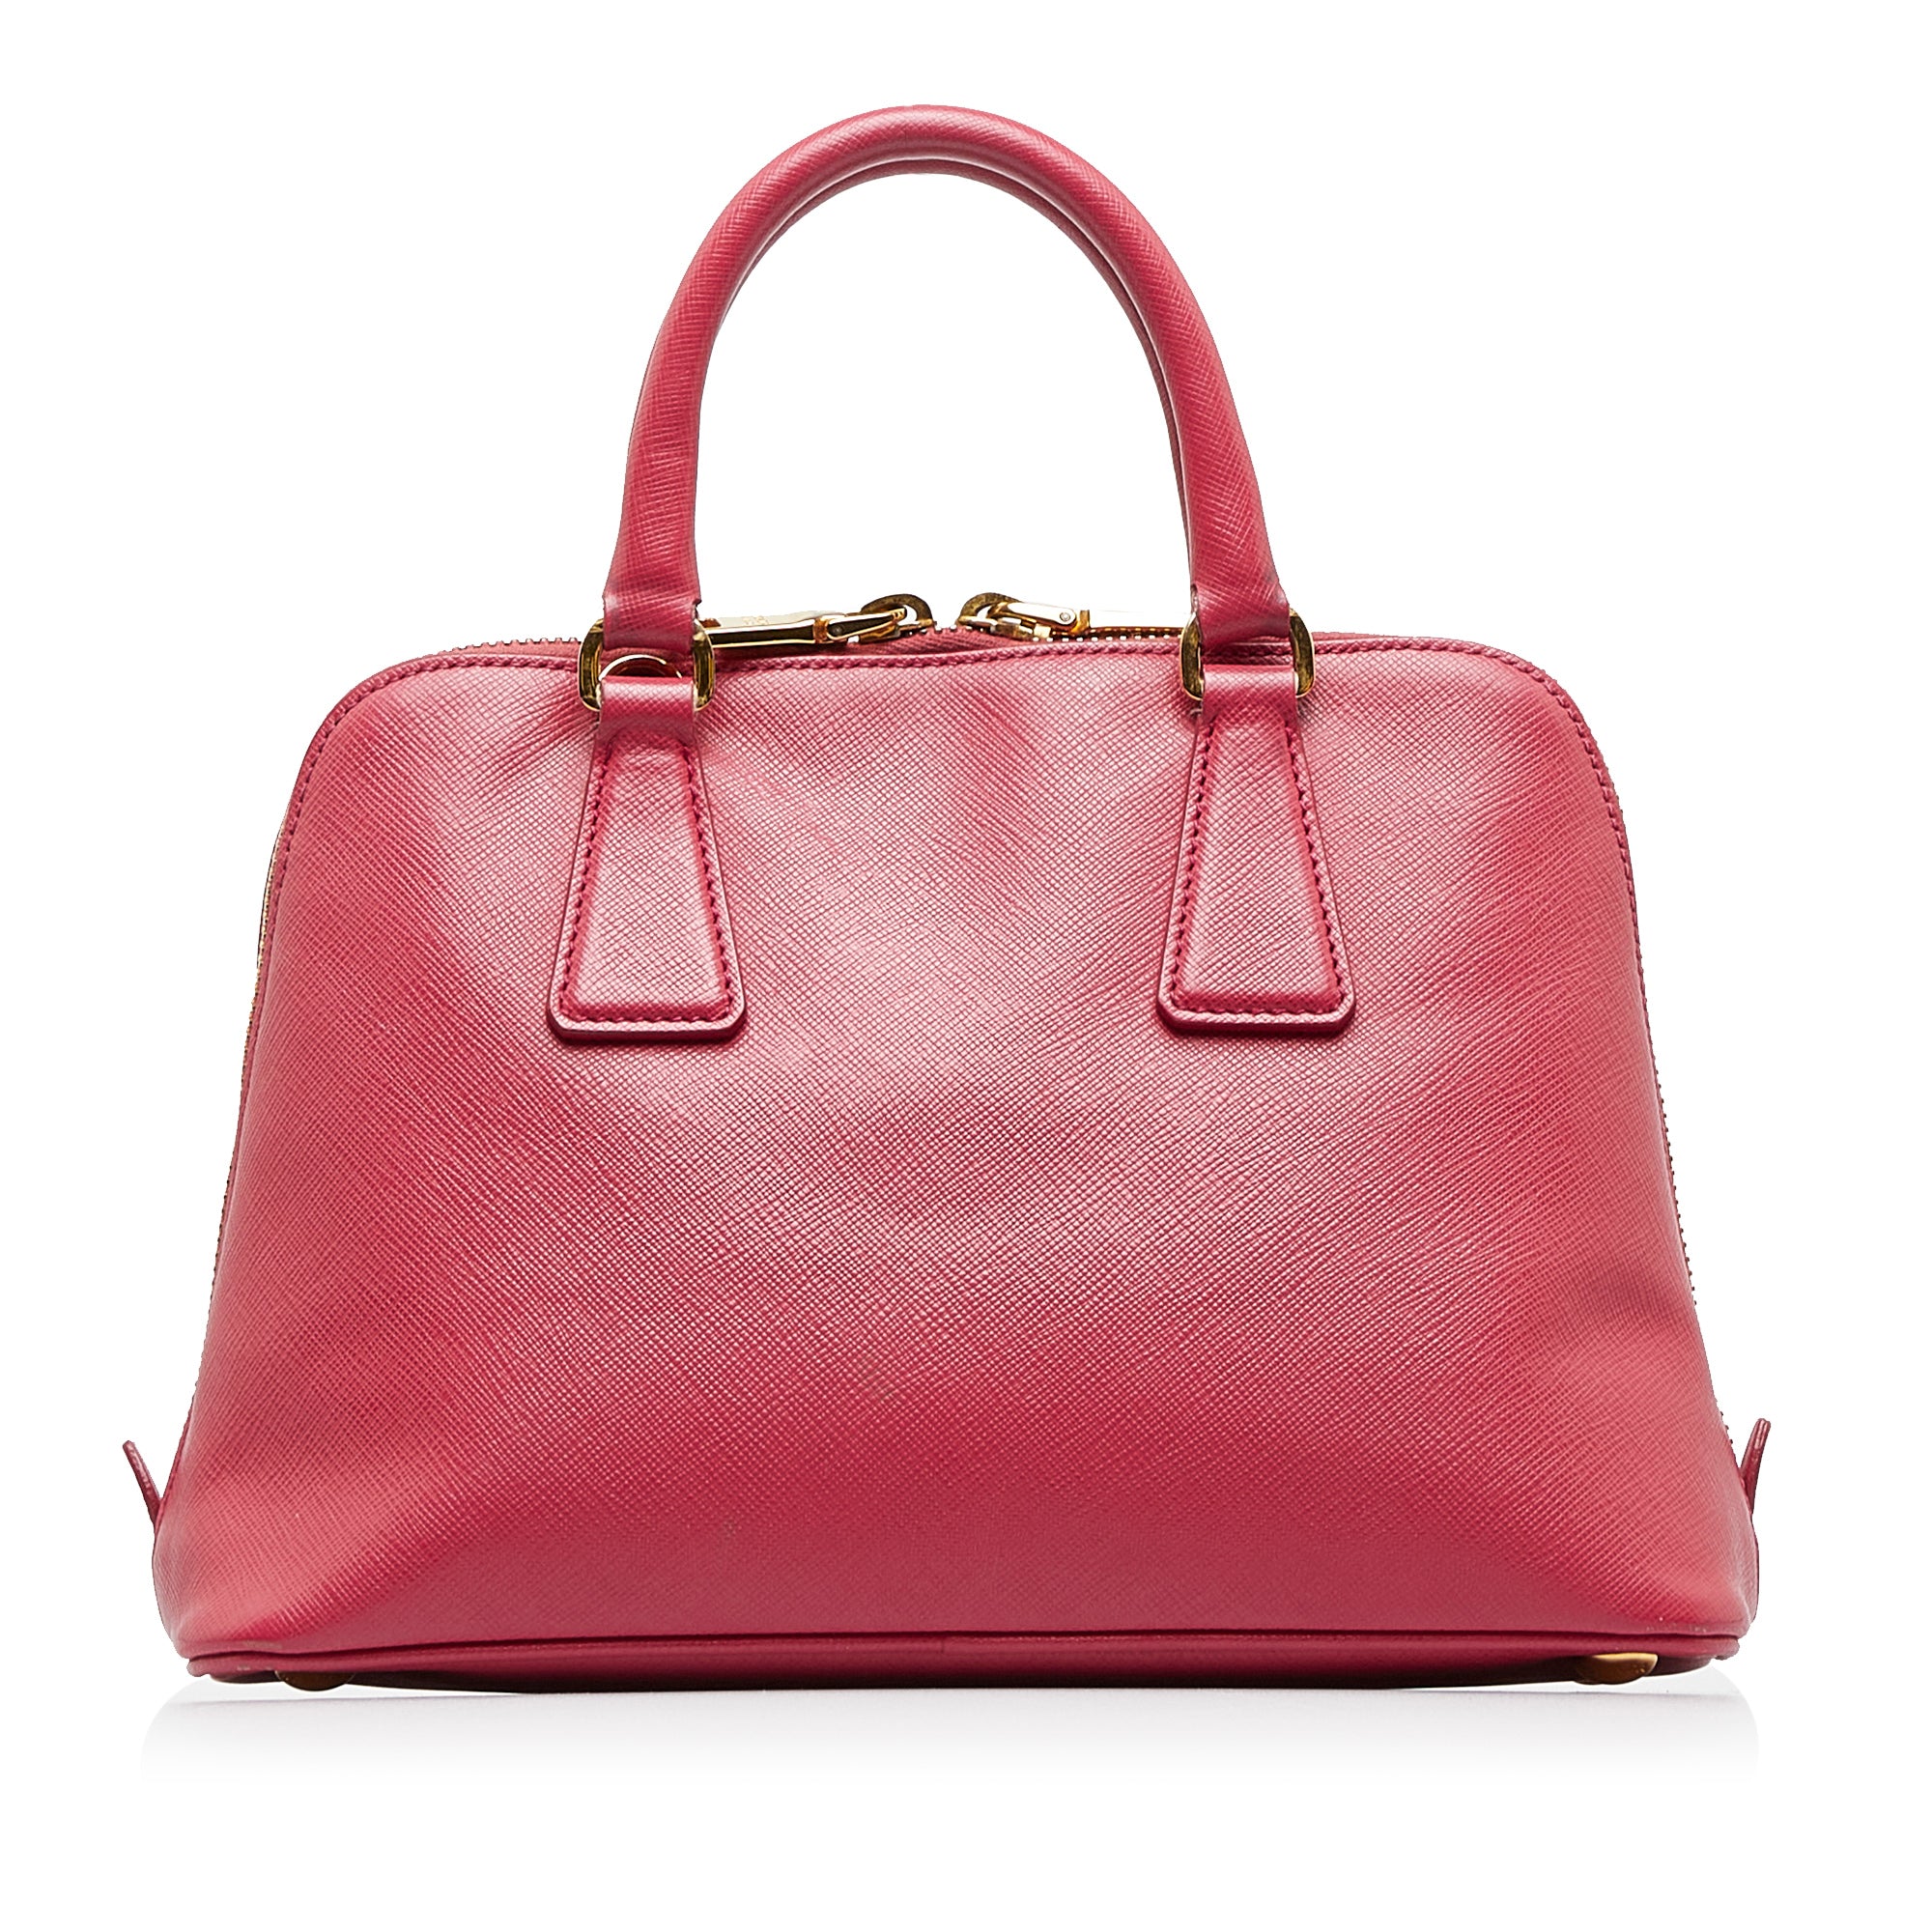 PRADA Promenade Small Saffiano Patent Leather Shoulder Bag Red